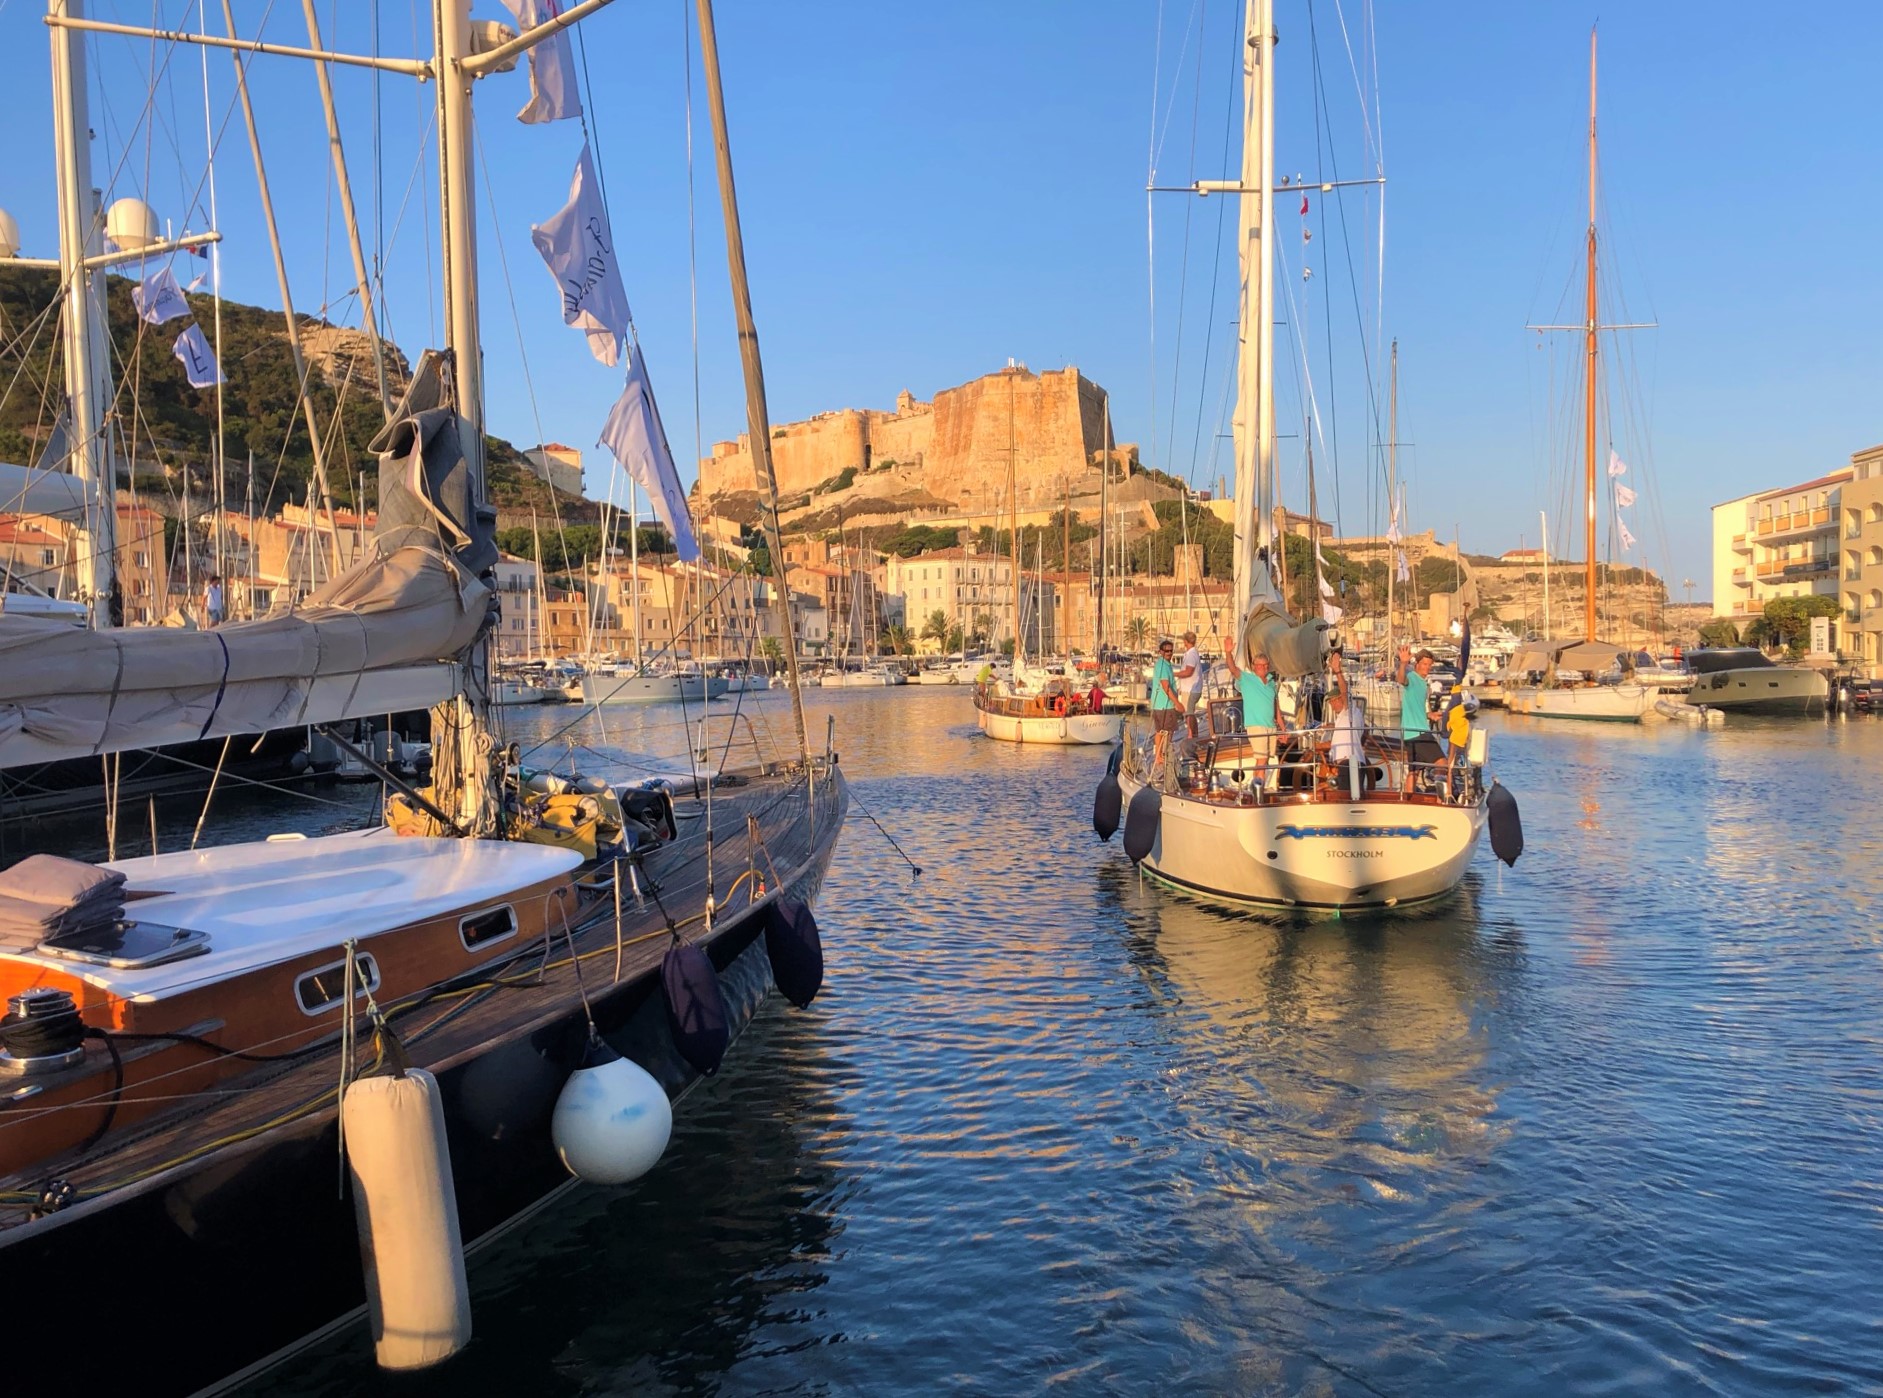 Bonifacio - Taverna, Bonifacio Marina, Corsica Classic 2021 photo Thibaud Assante DR